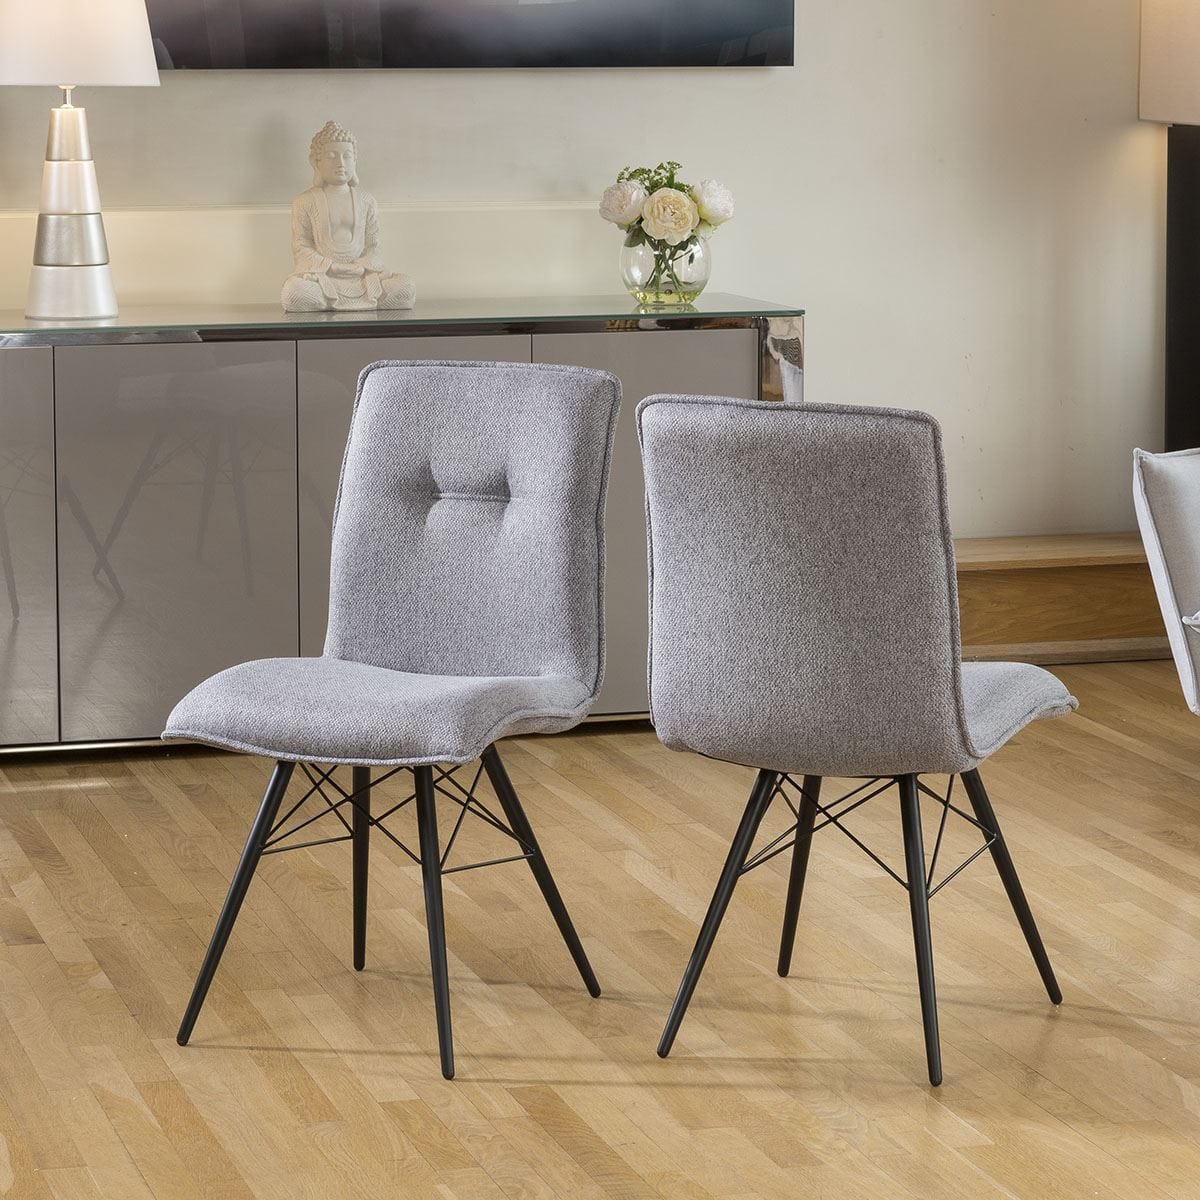 Quatropi Set of 2 Dining Chairs Light Grey Fabric Black Powder Coated Legs 9137